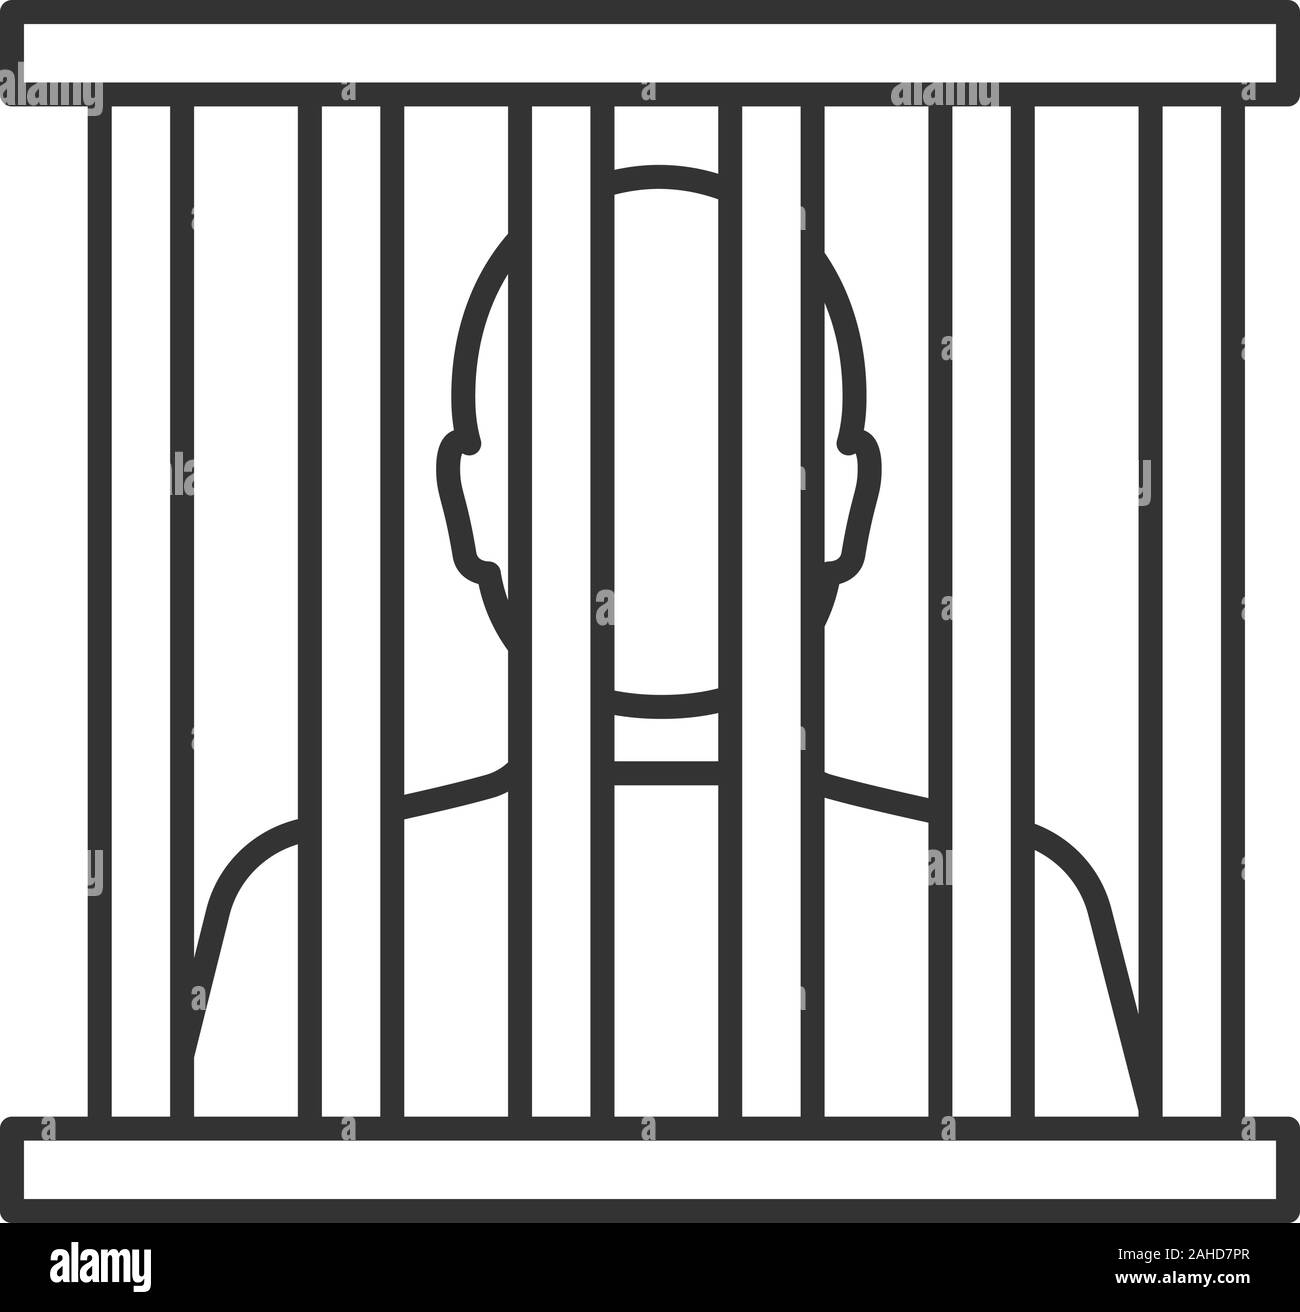 Top Drawing Of Jail Cell Bars Stock Vectors Illustrations  Clip Art   iStock